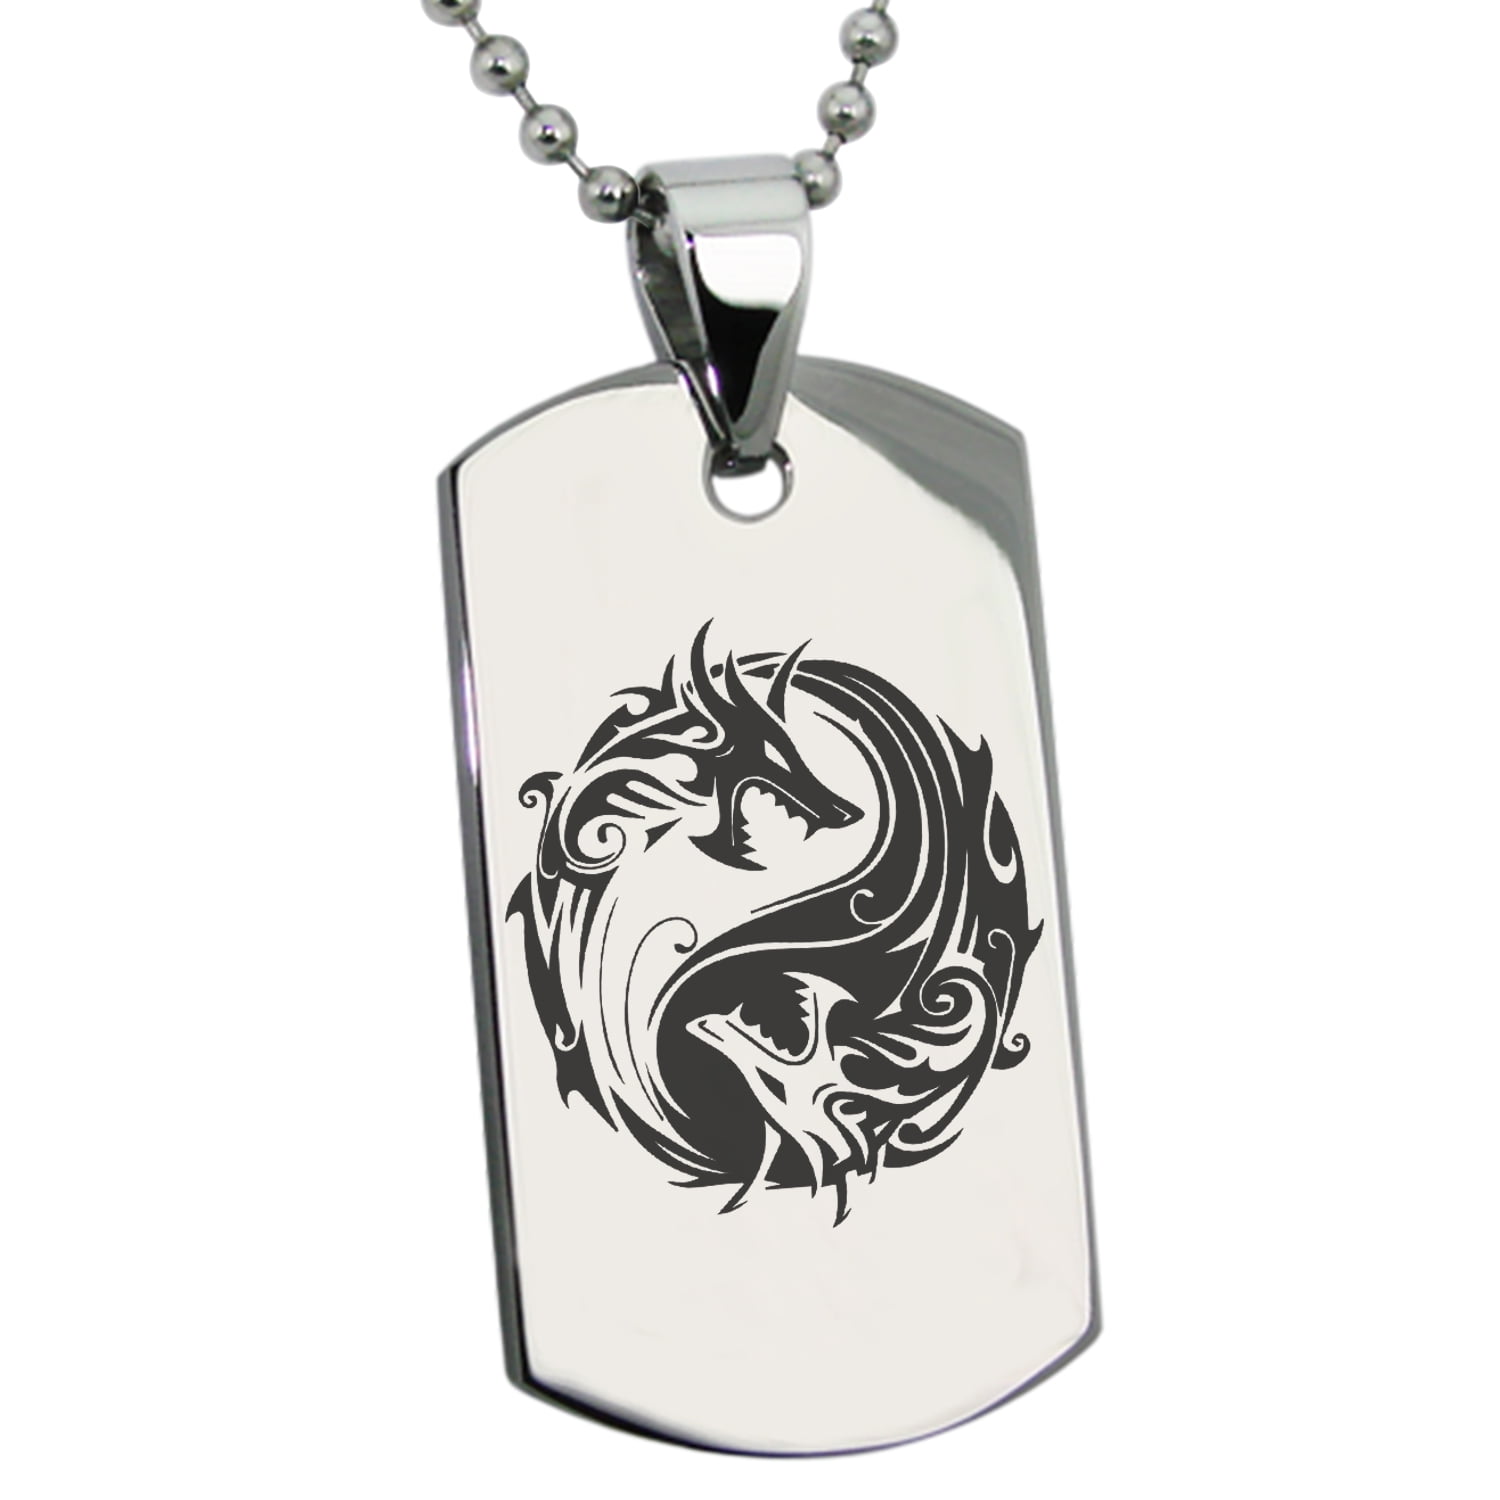 Rasta King of Juddah Lion Crest Logo Symbol Military Dog Tag Luggage Tag Key Chain Metal Chain Necklace